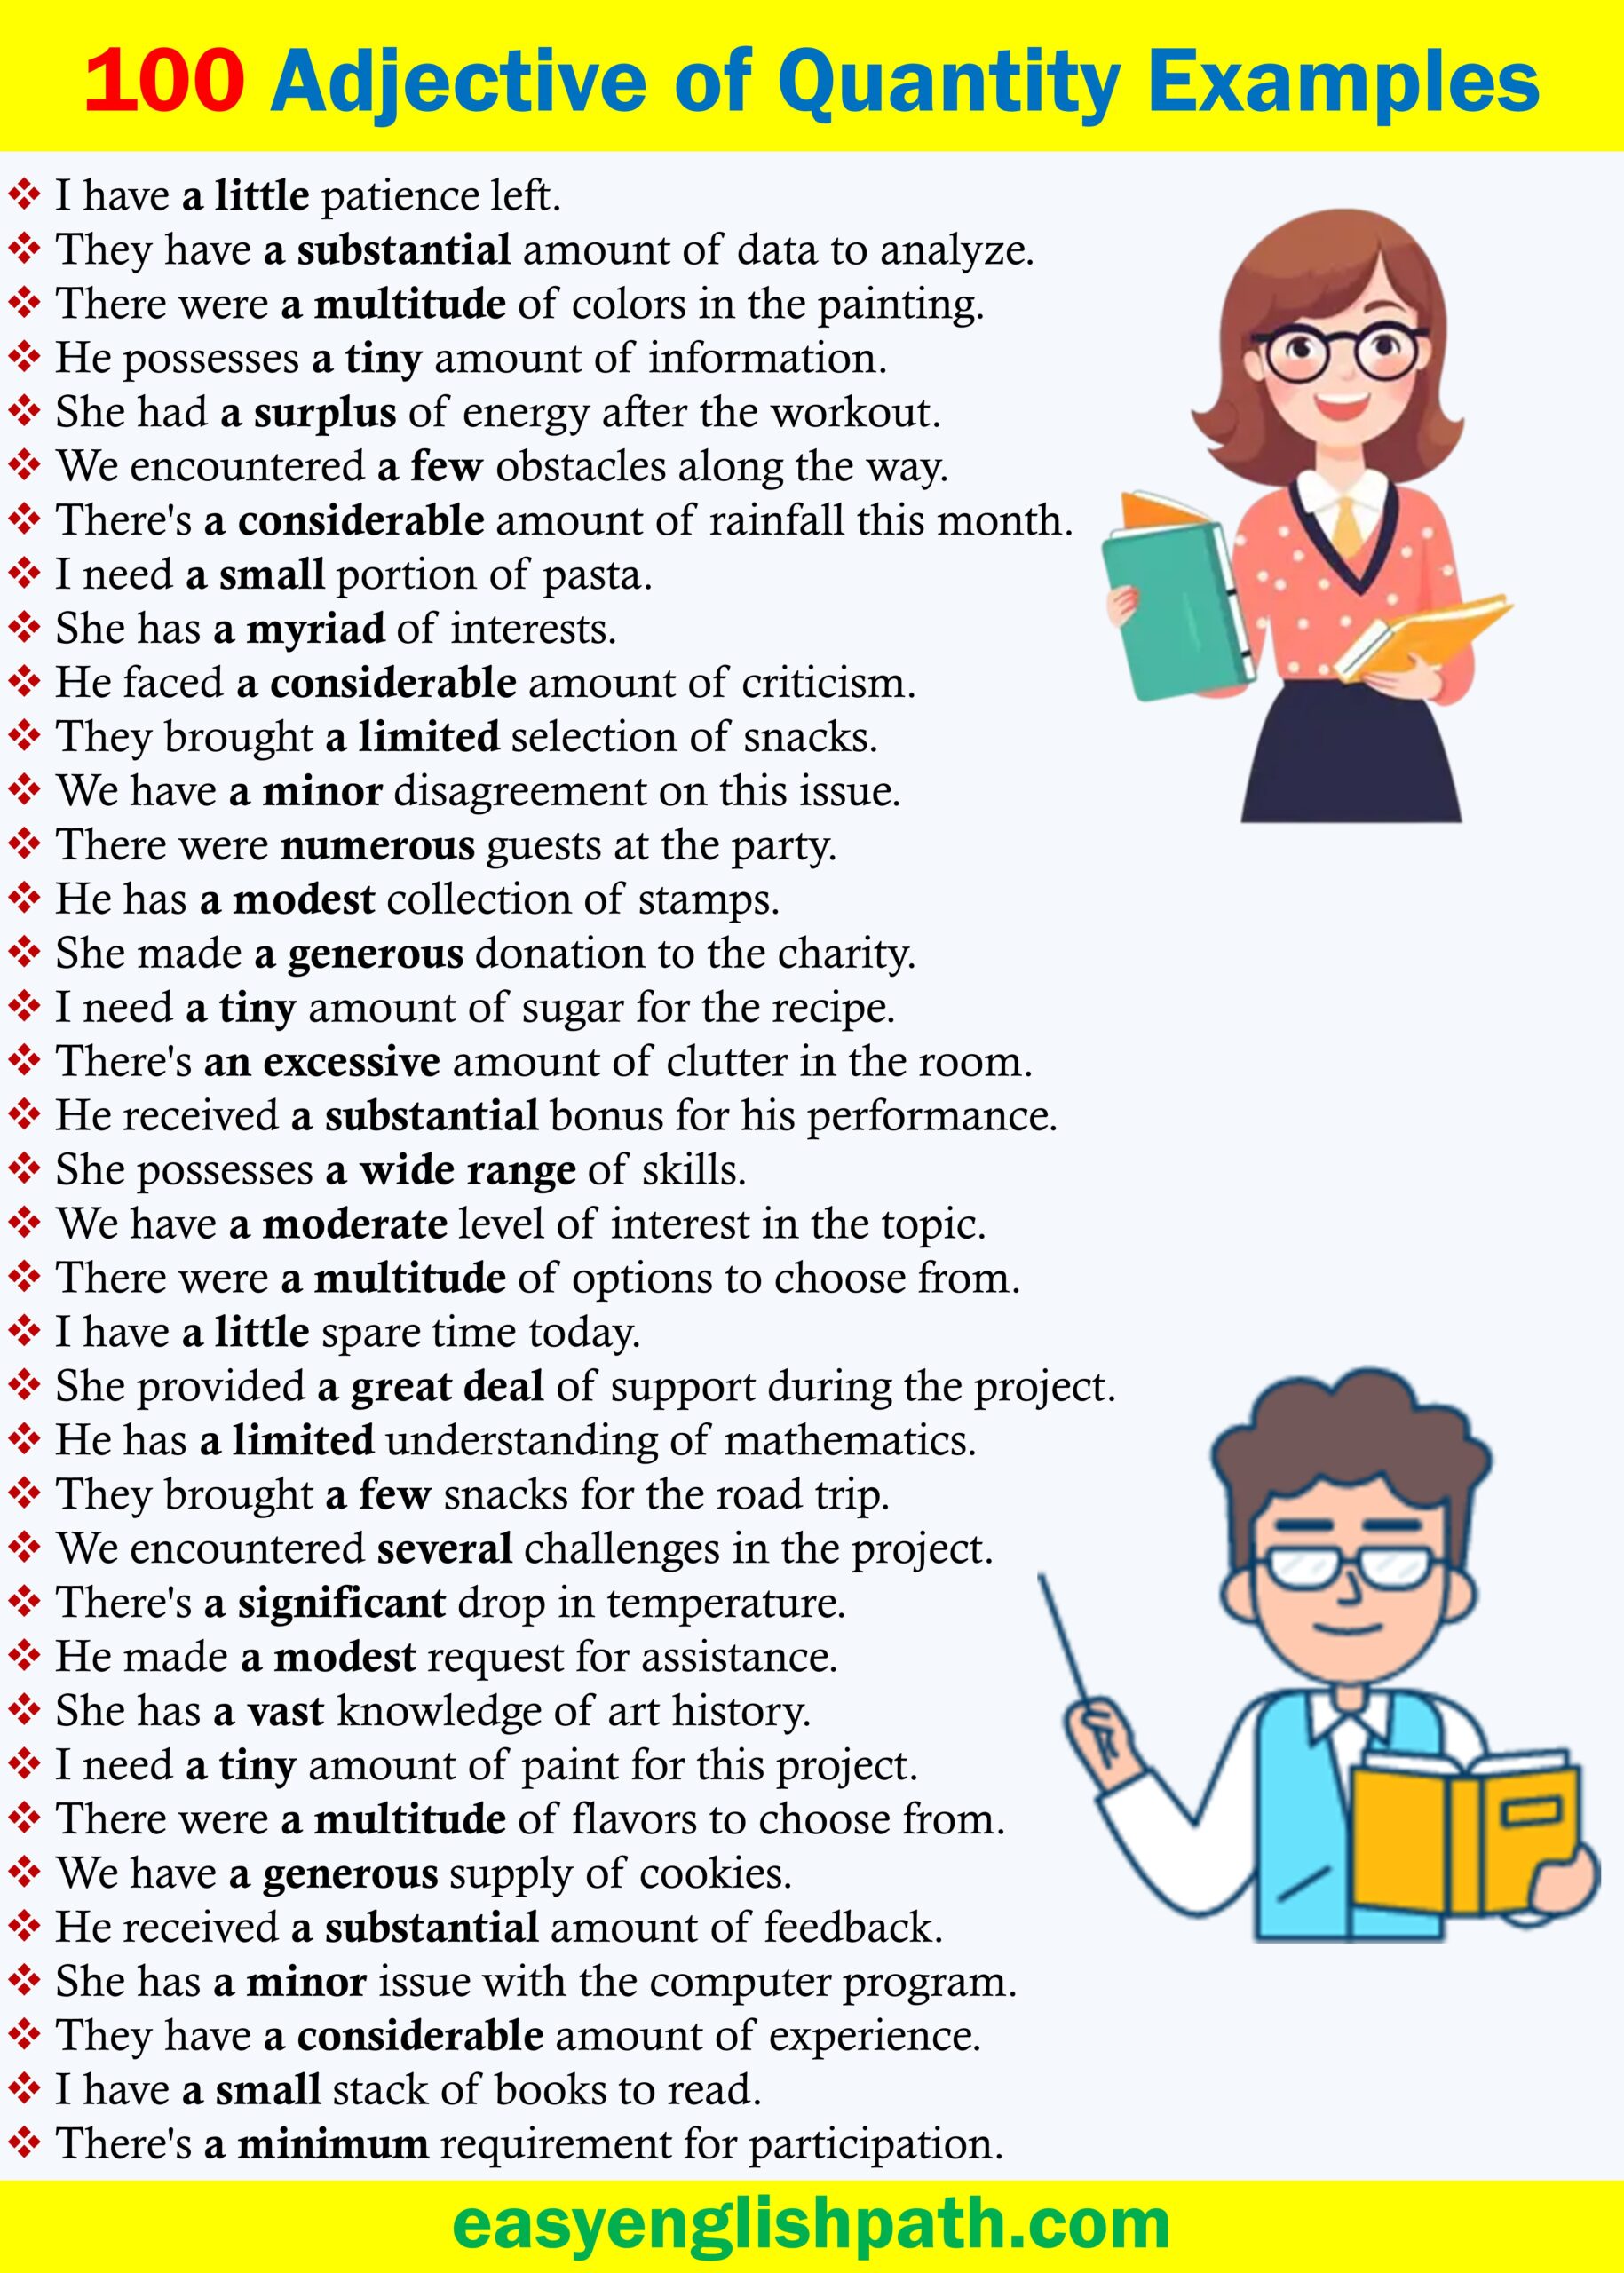 100 Adjective of Quantity Example Sentences